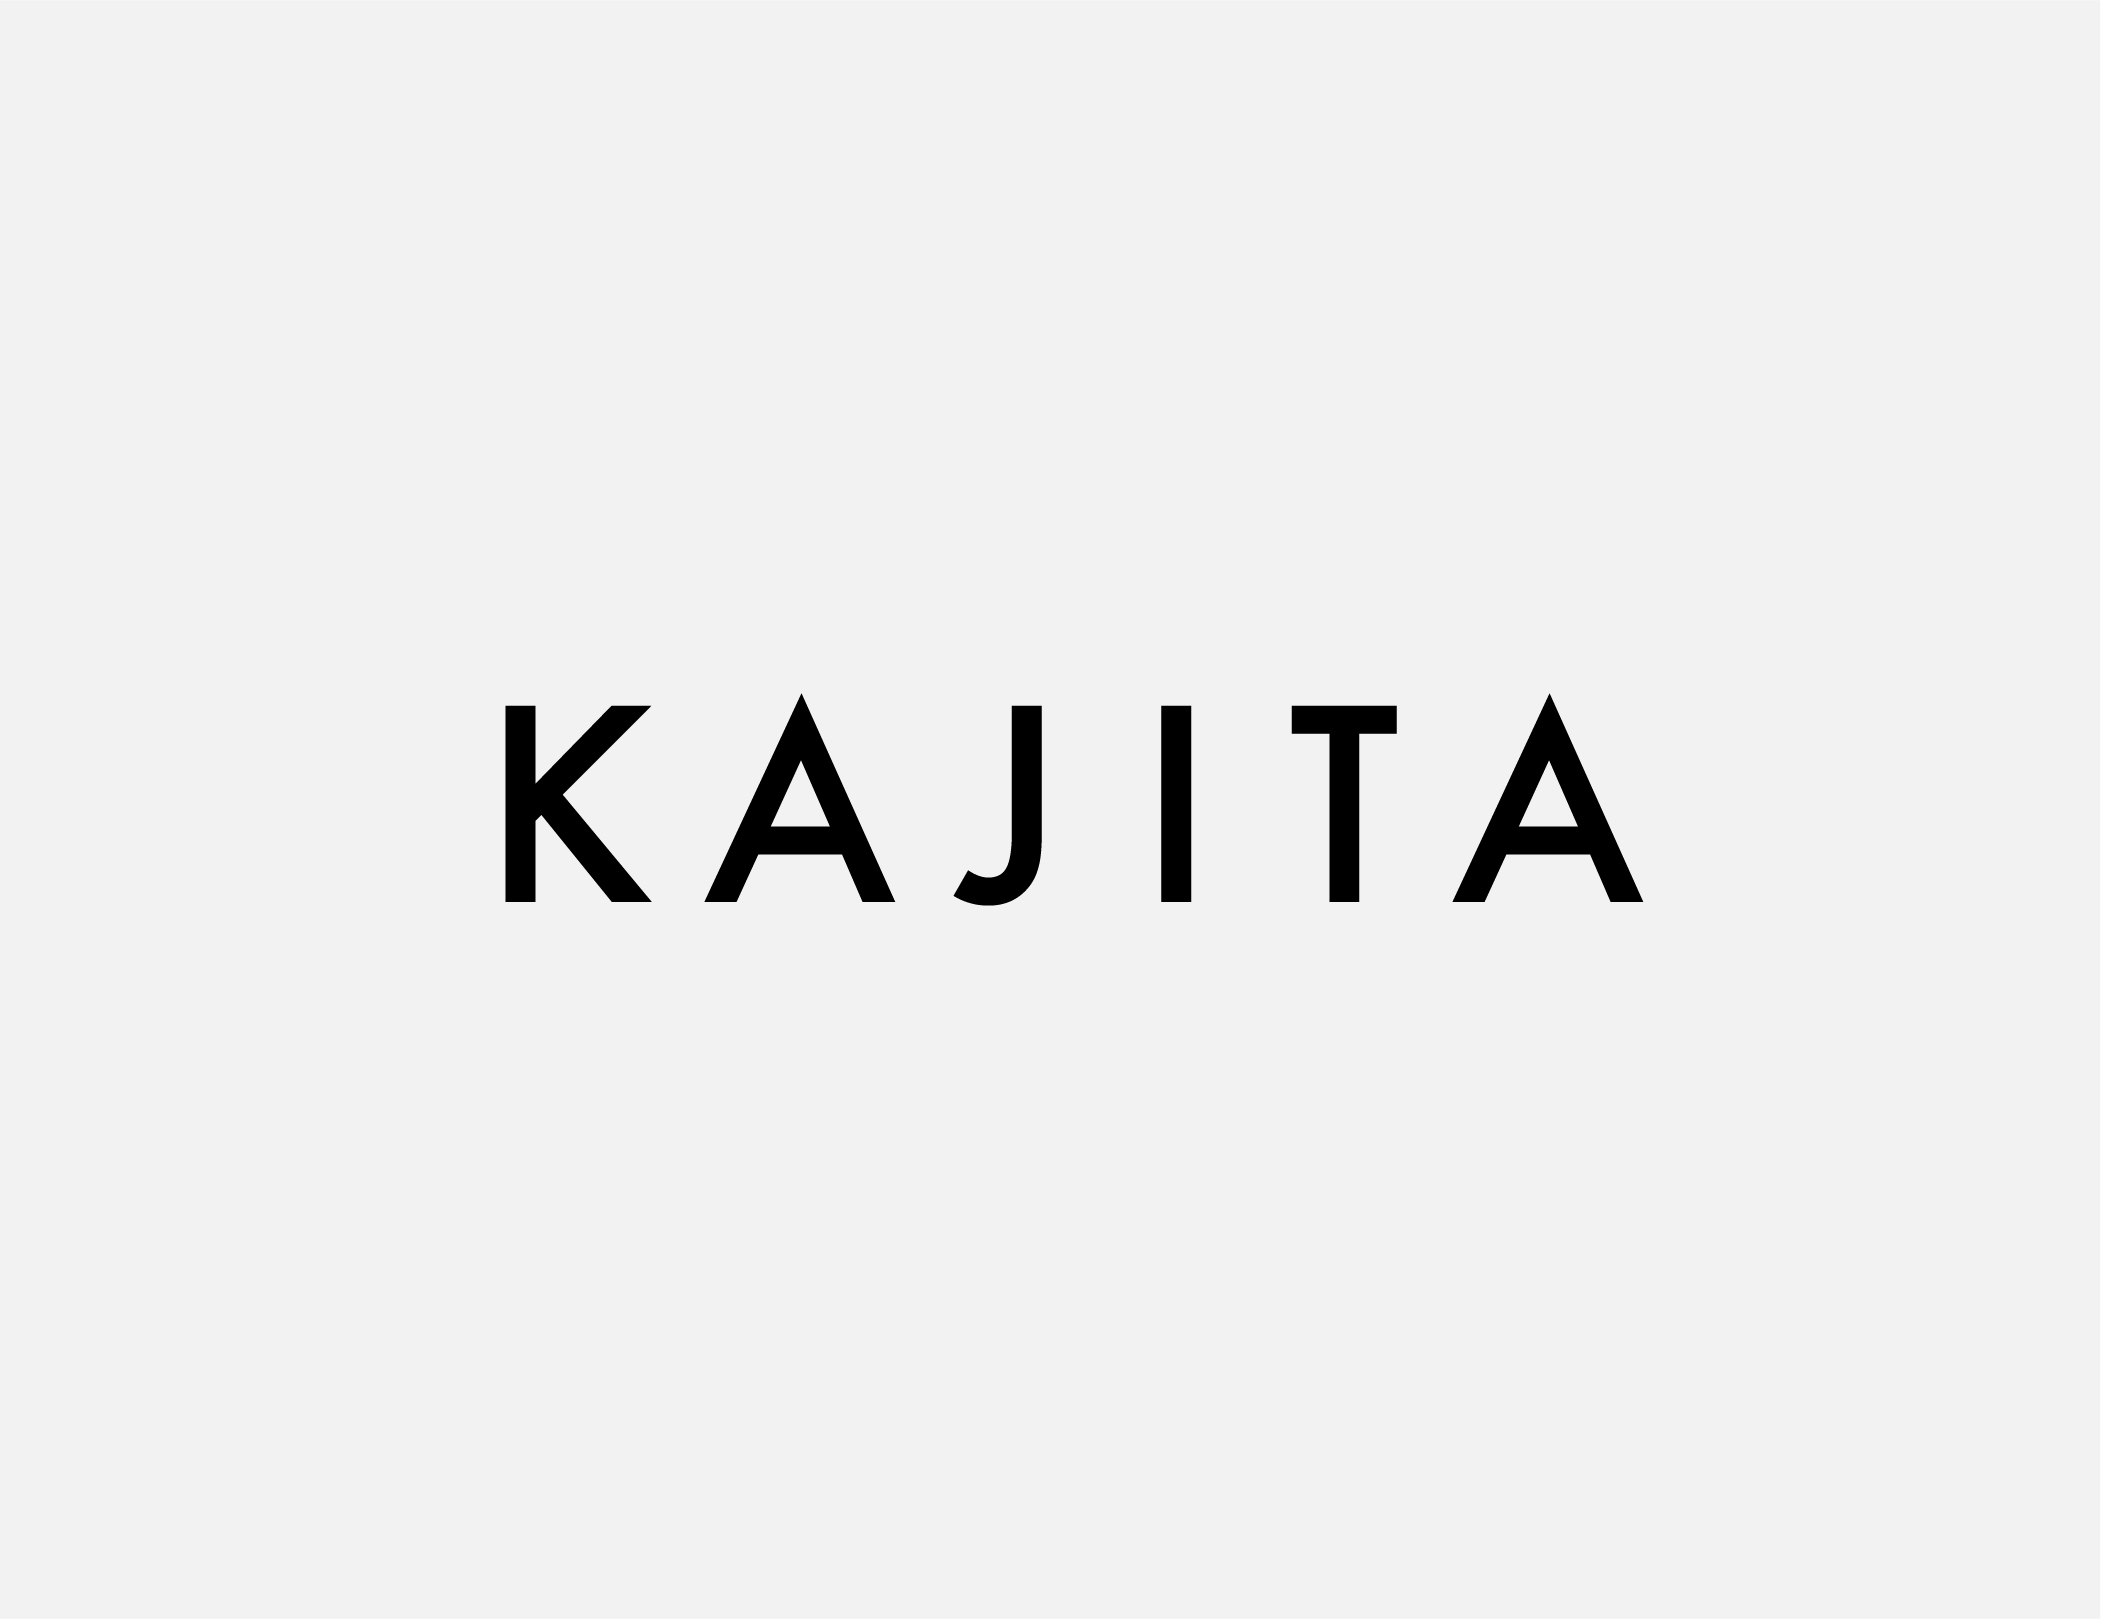 KAJITA Logotype